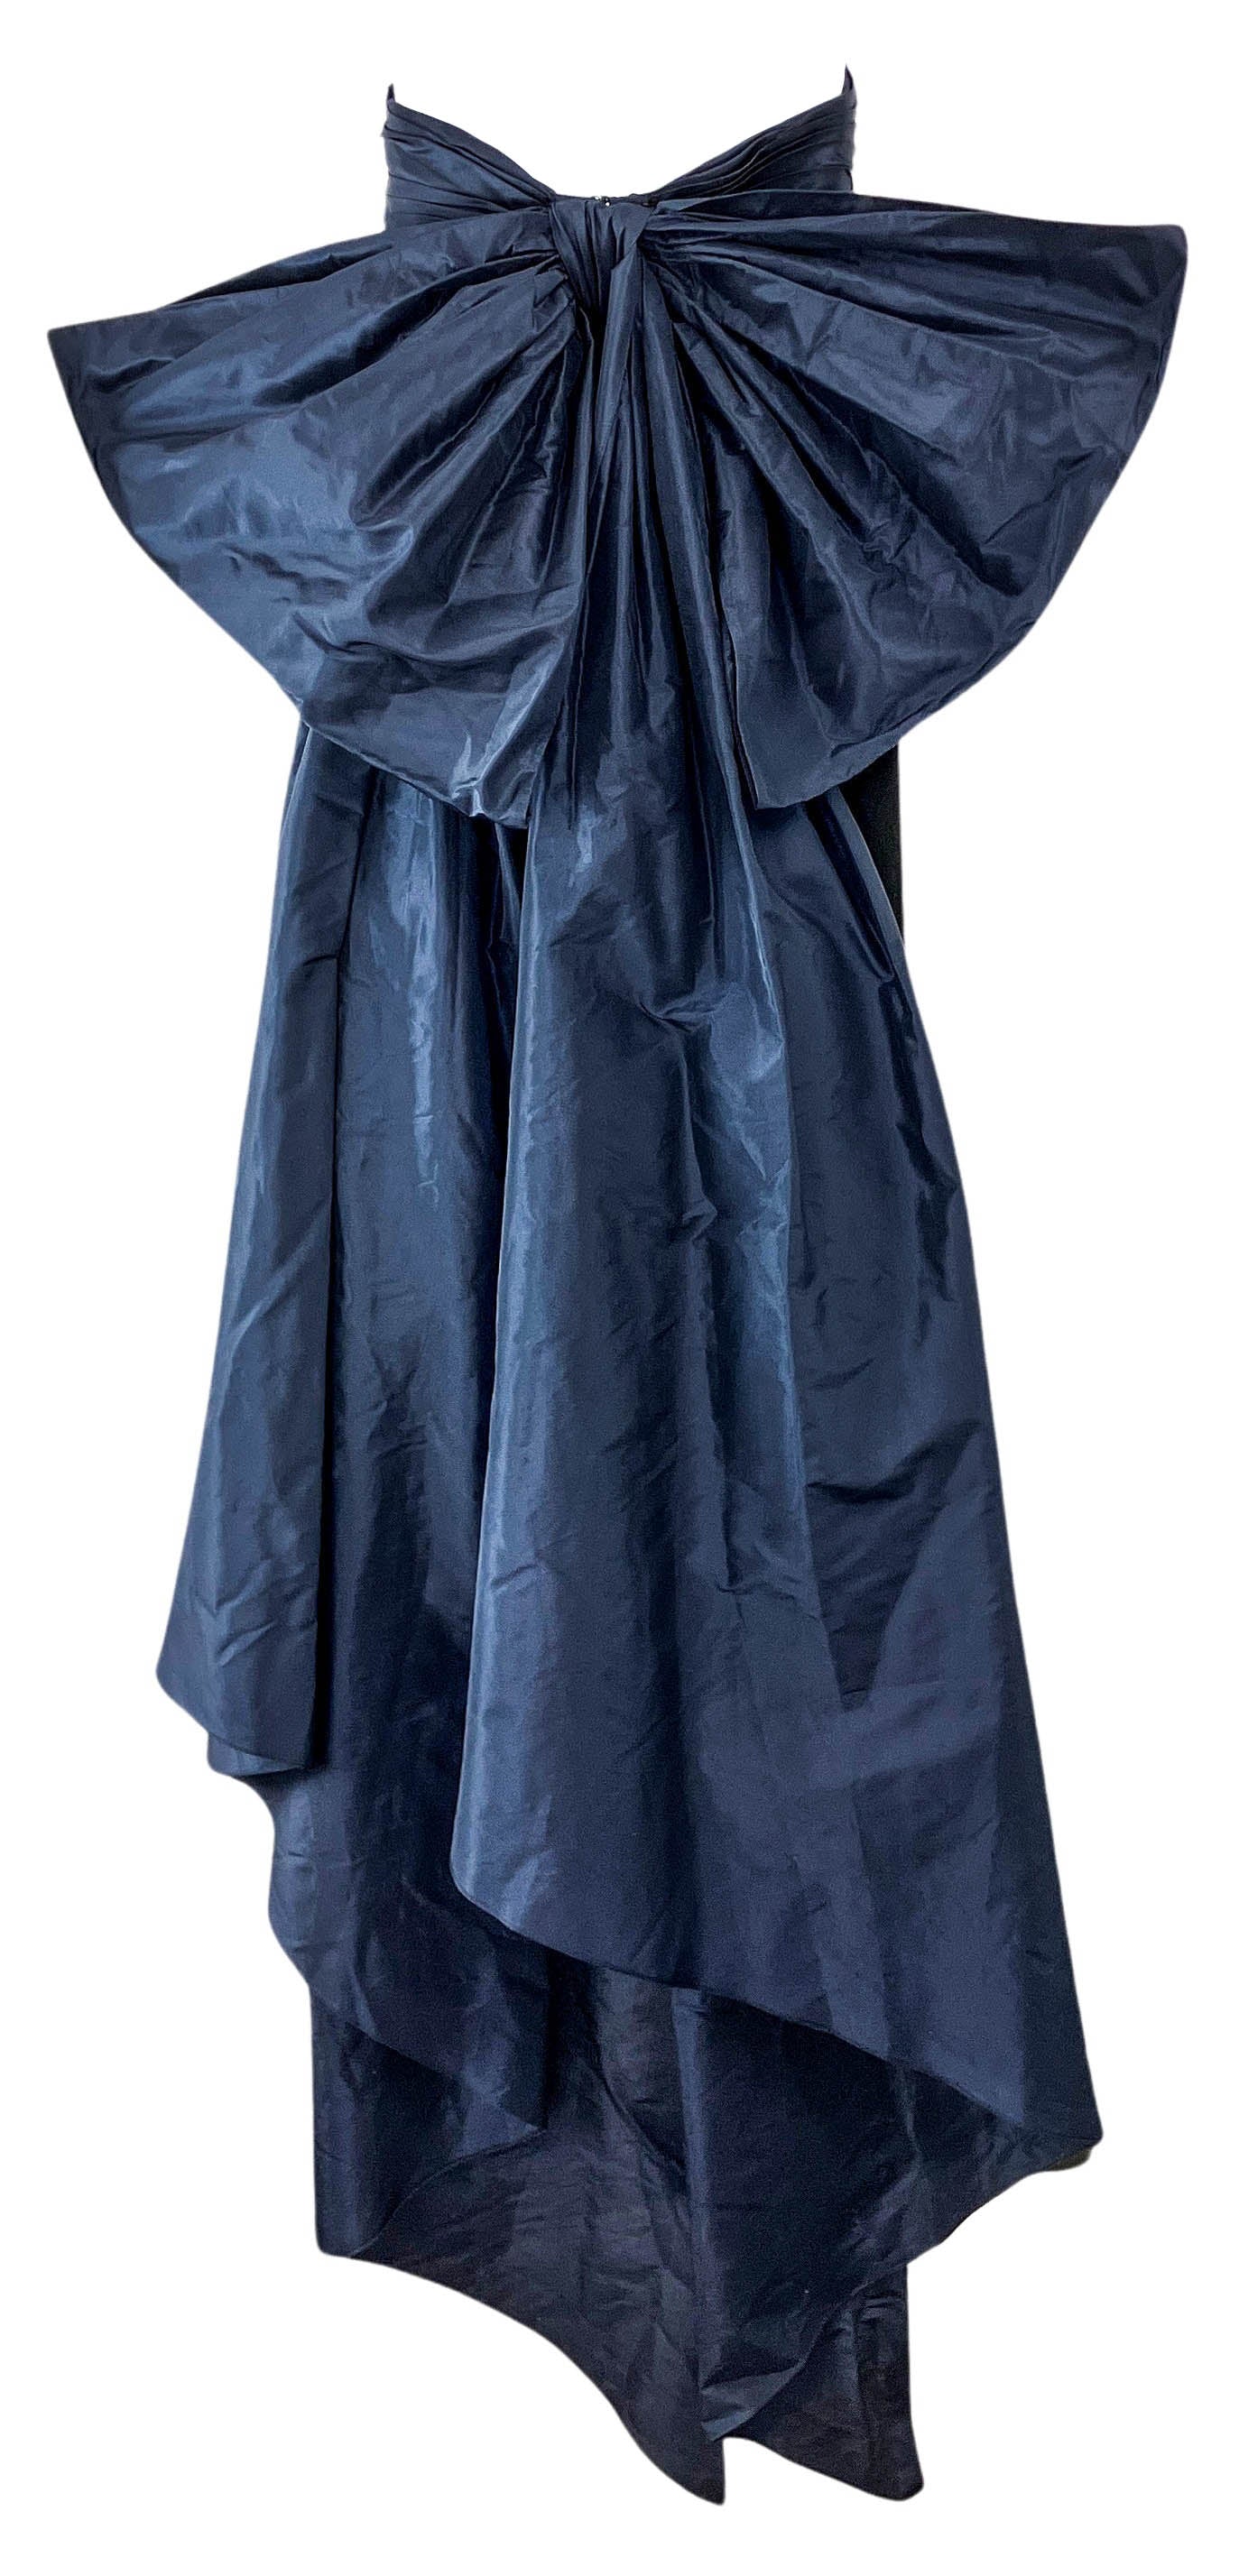 Oscar de la Renta Bow Embellished Knit Gown in Navy/Black - Discounts on Oscar de la Renta at UAL